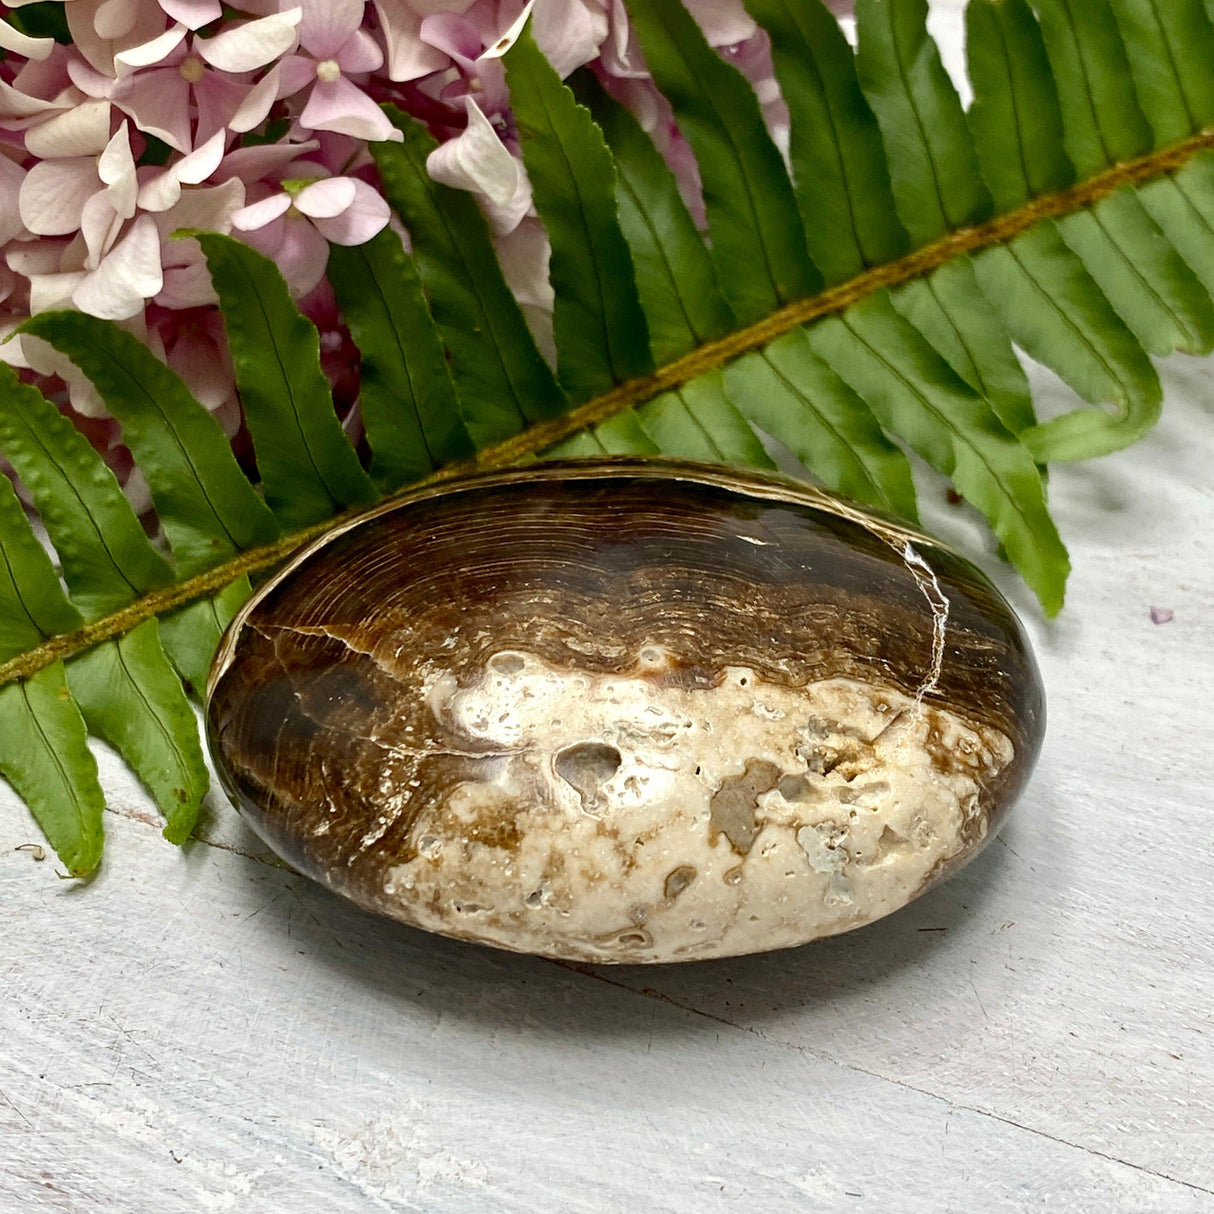 Chocolate Calcite Palmstone CCP-06 - Nature's Magick